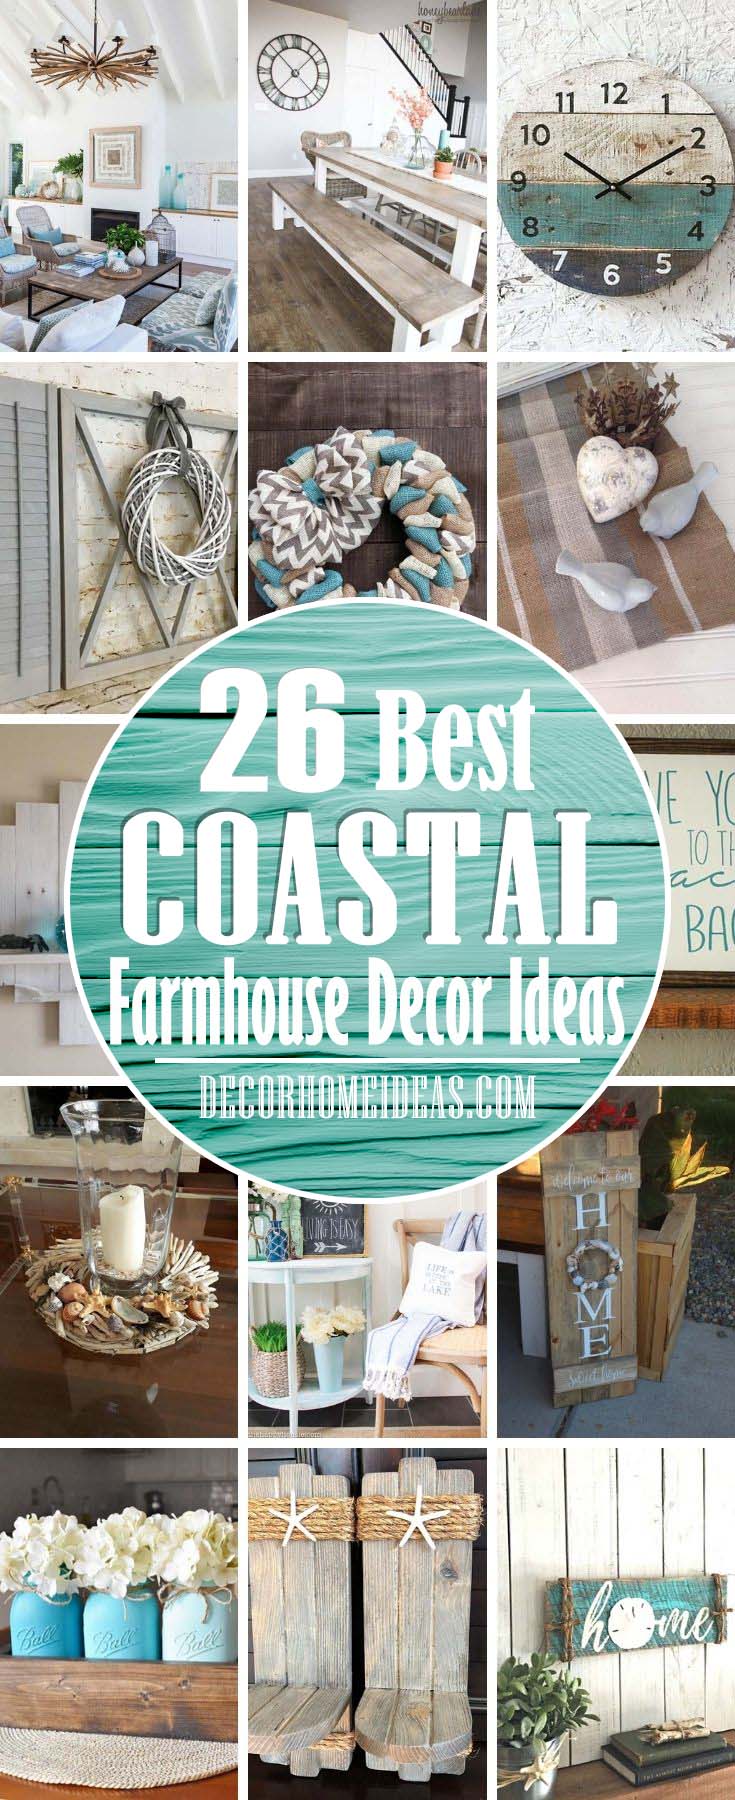 Best Coastal Farmhouse Decor Ideas